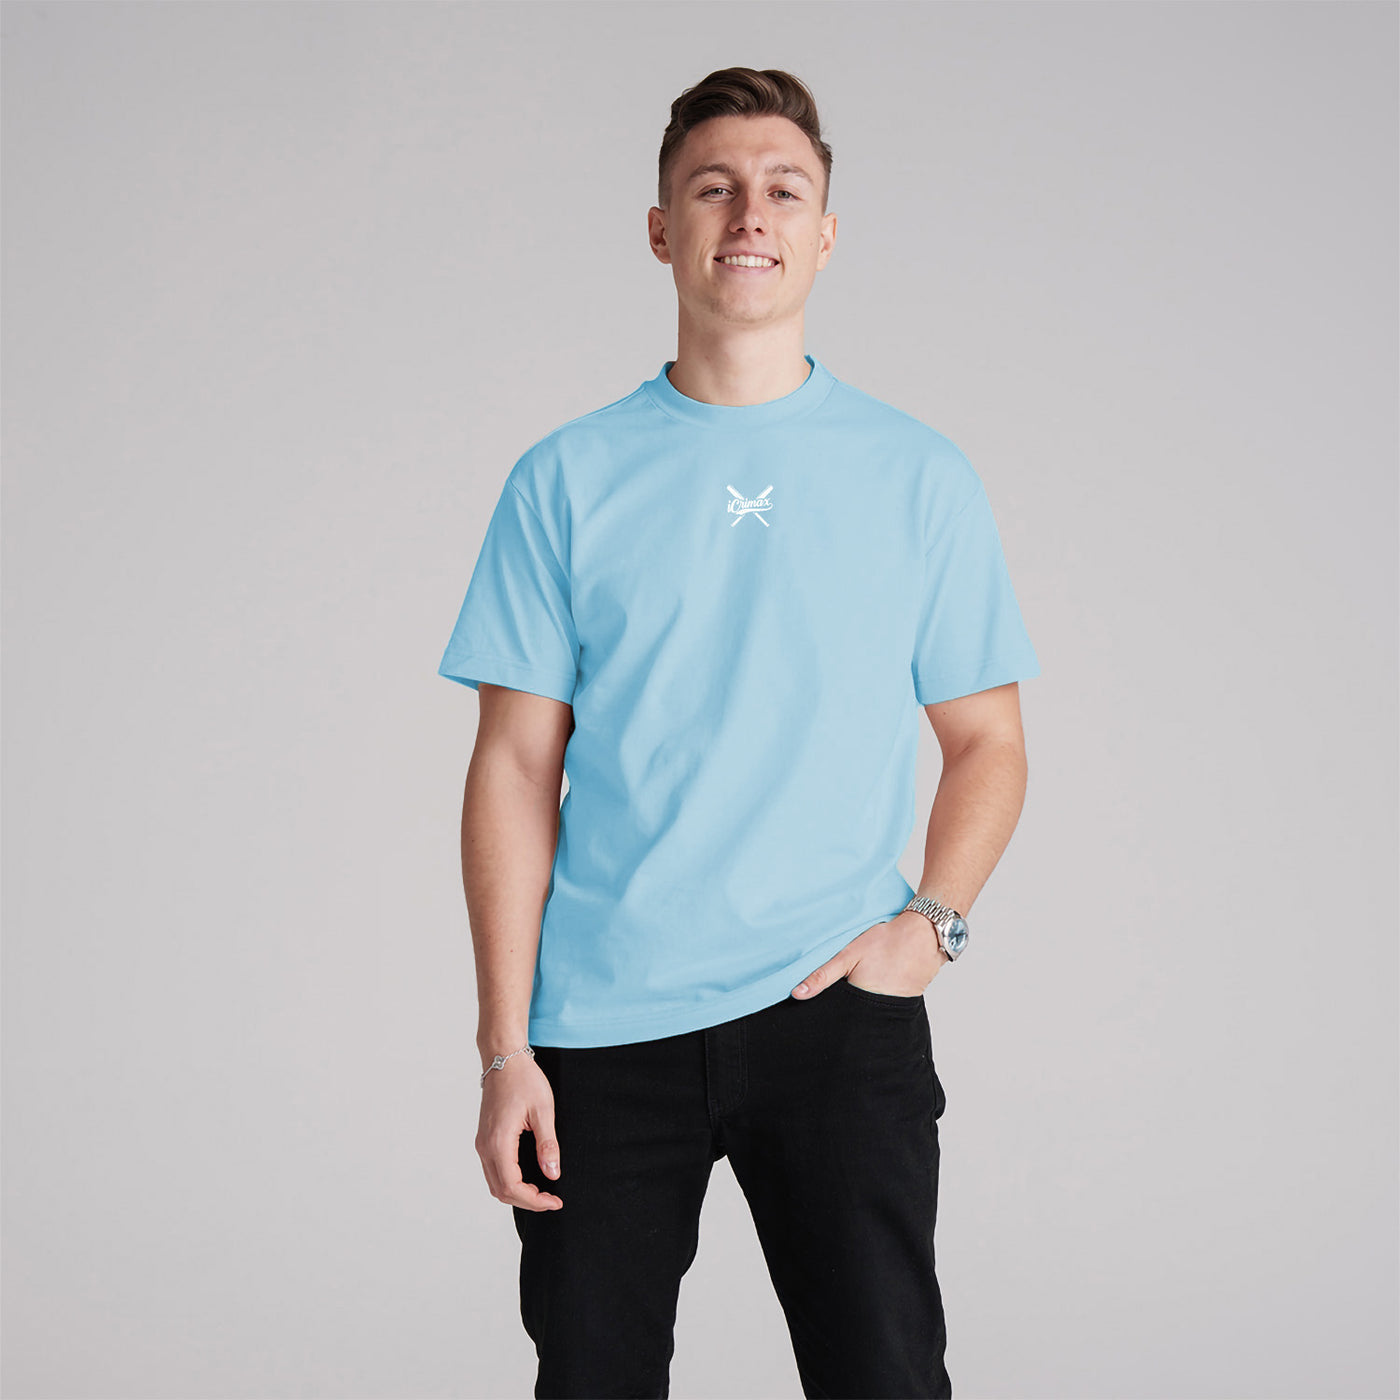 iCrimax Paulberger T-Shirt Blue